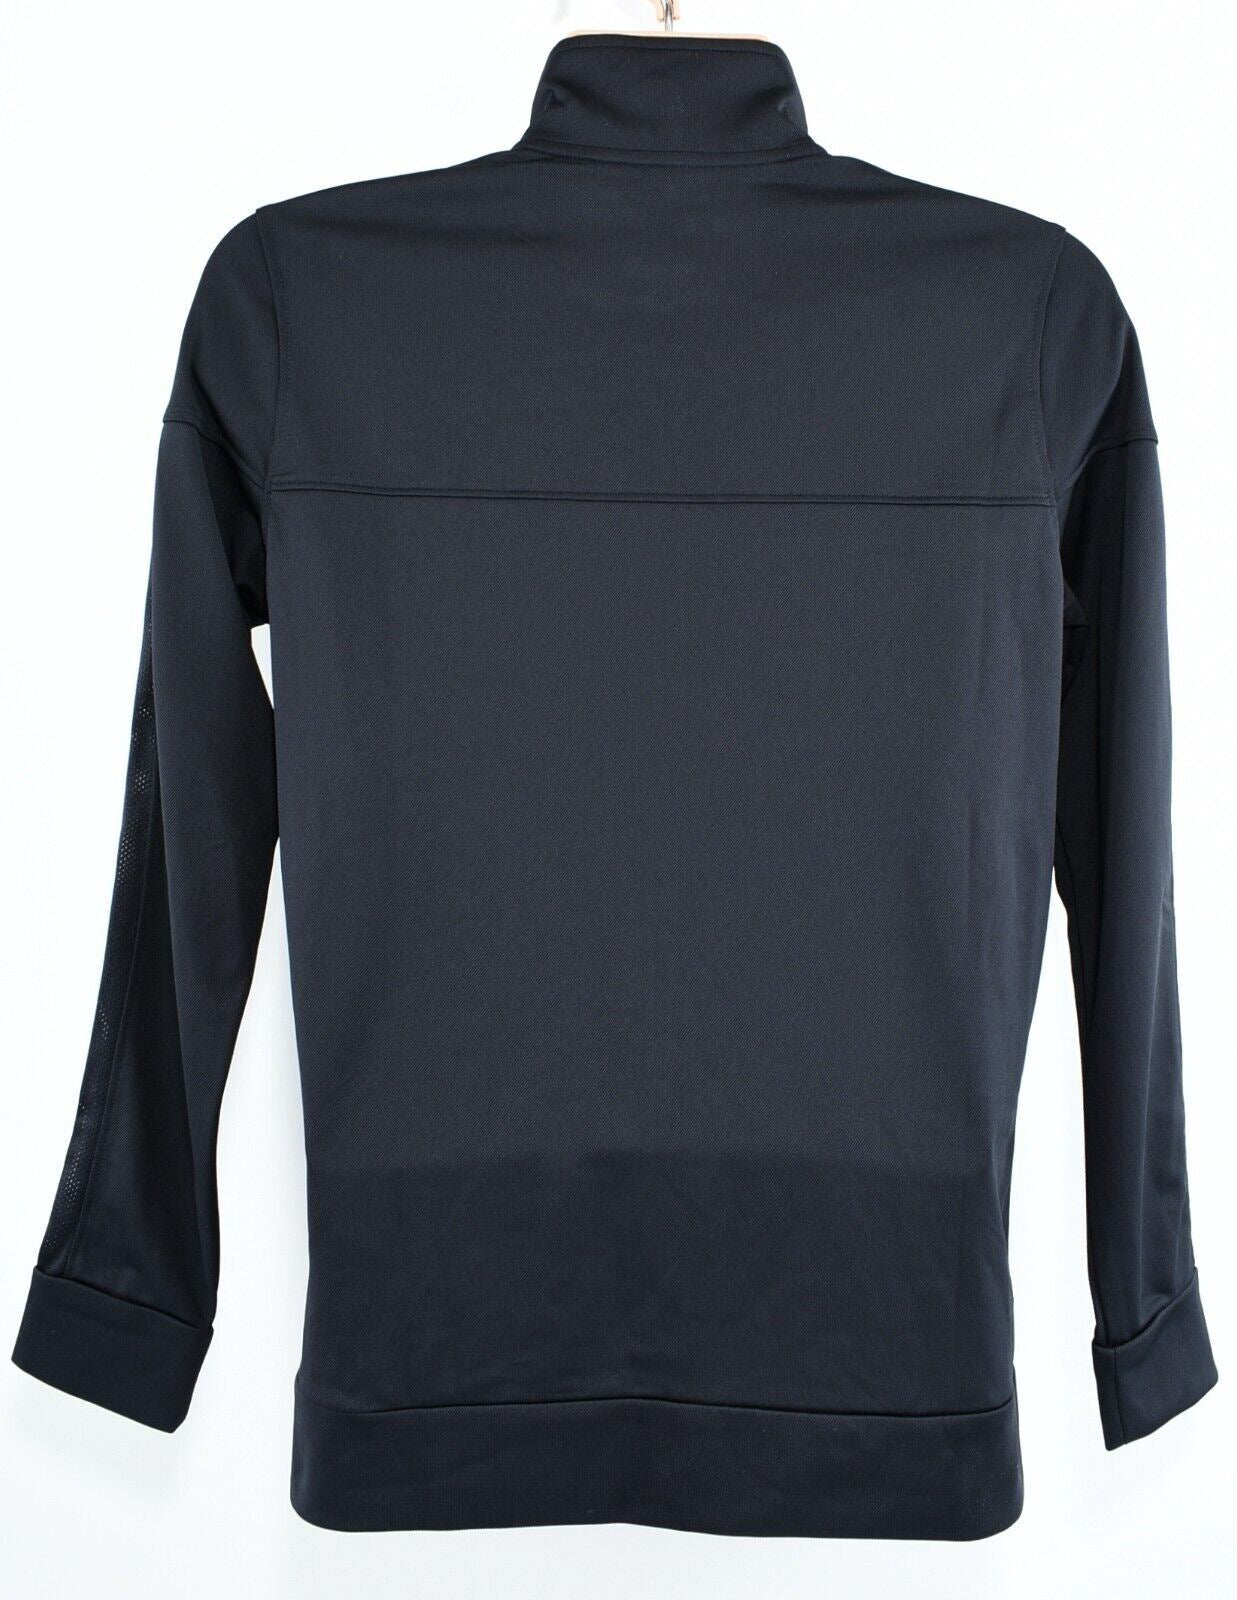 UNDER ARMOUR Men's Sportstyle Zip Tracktop / Tricot Jacket, Black, size S